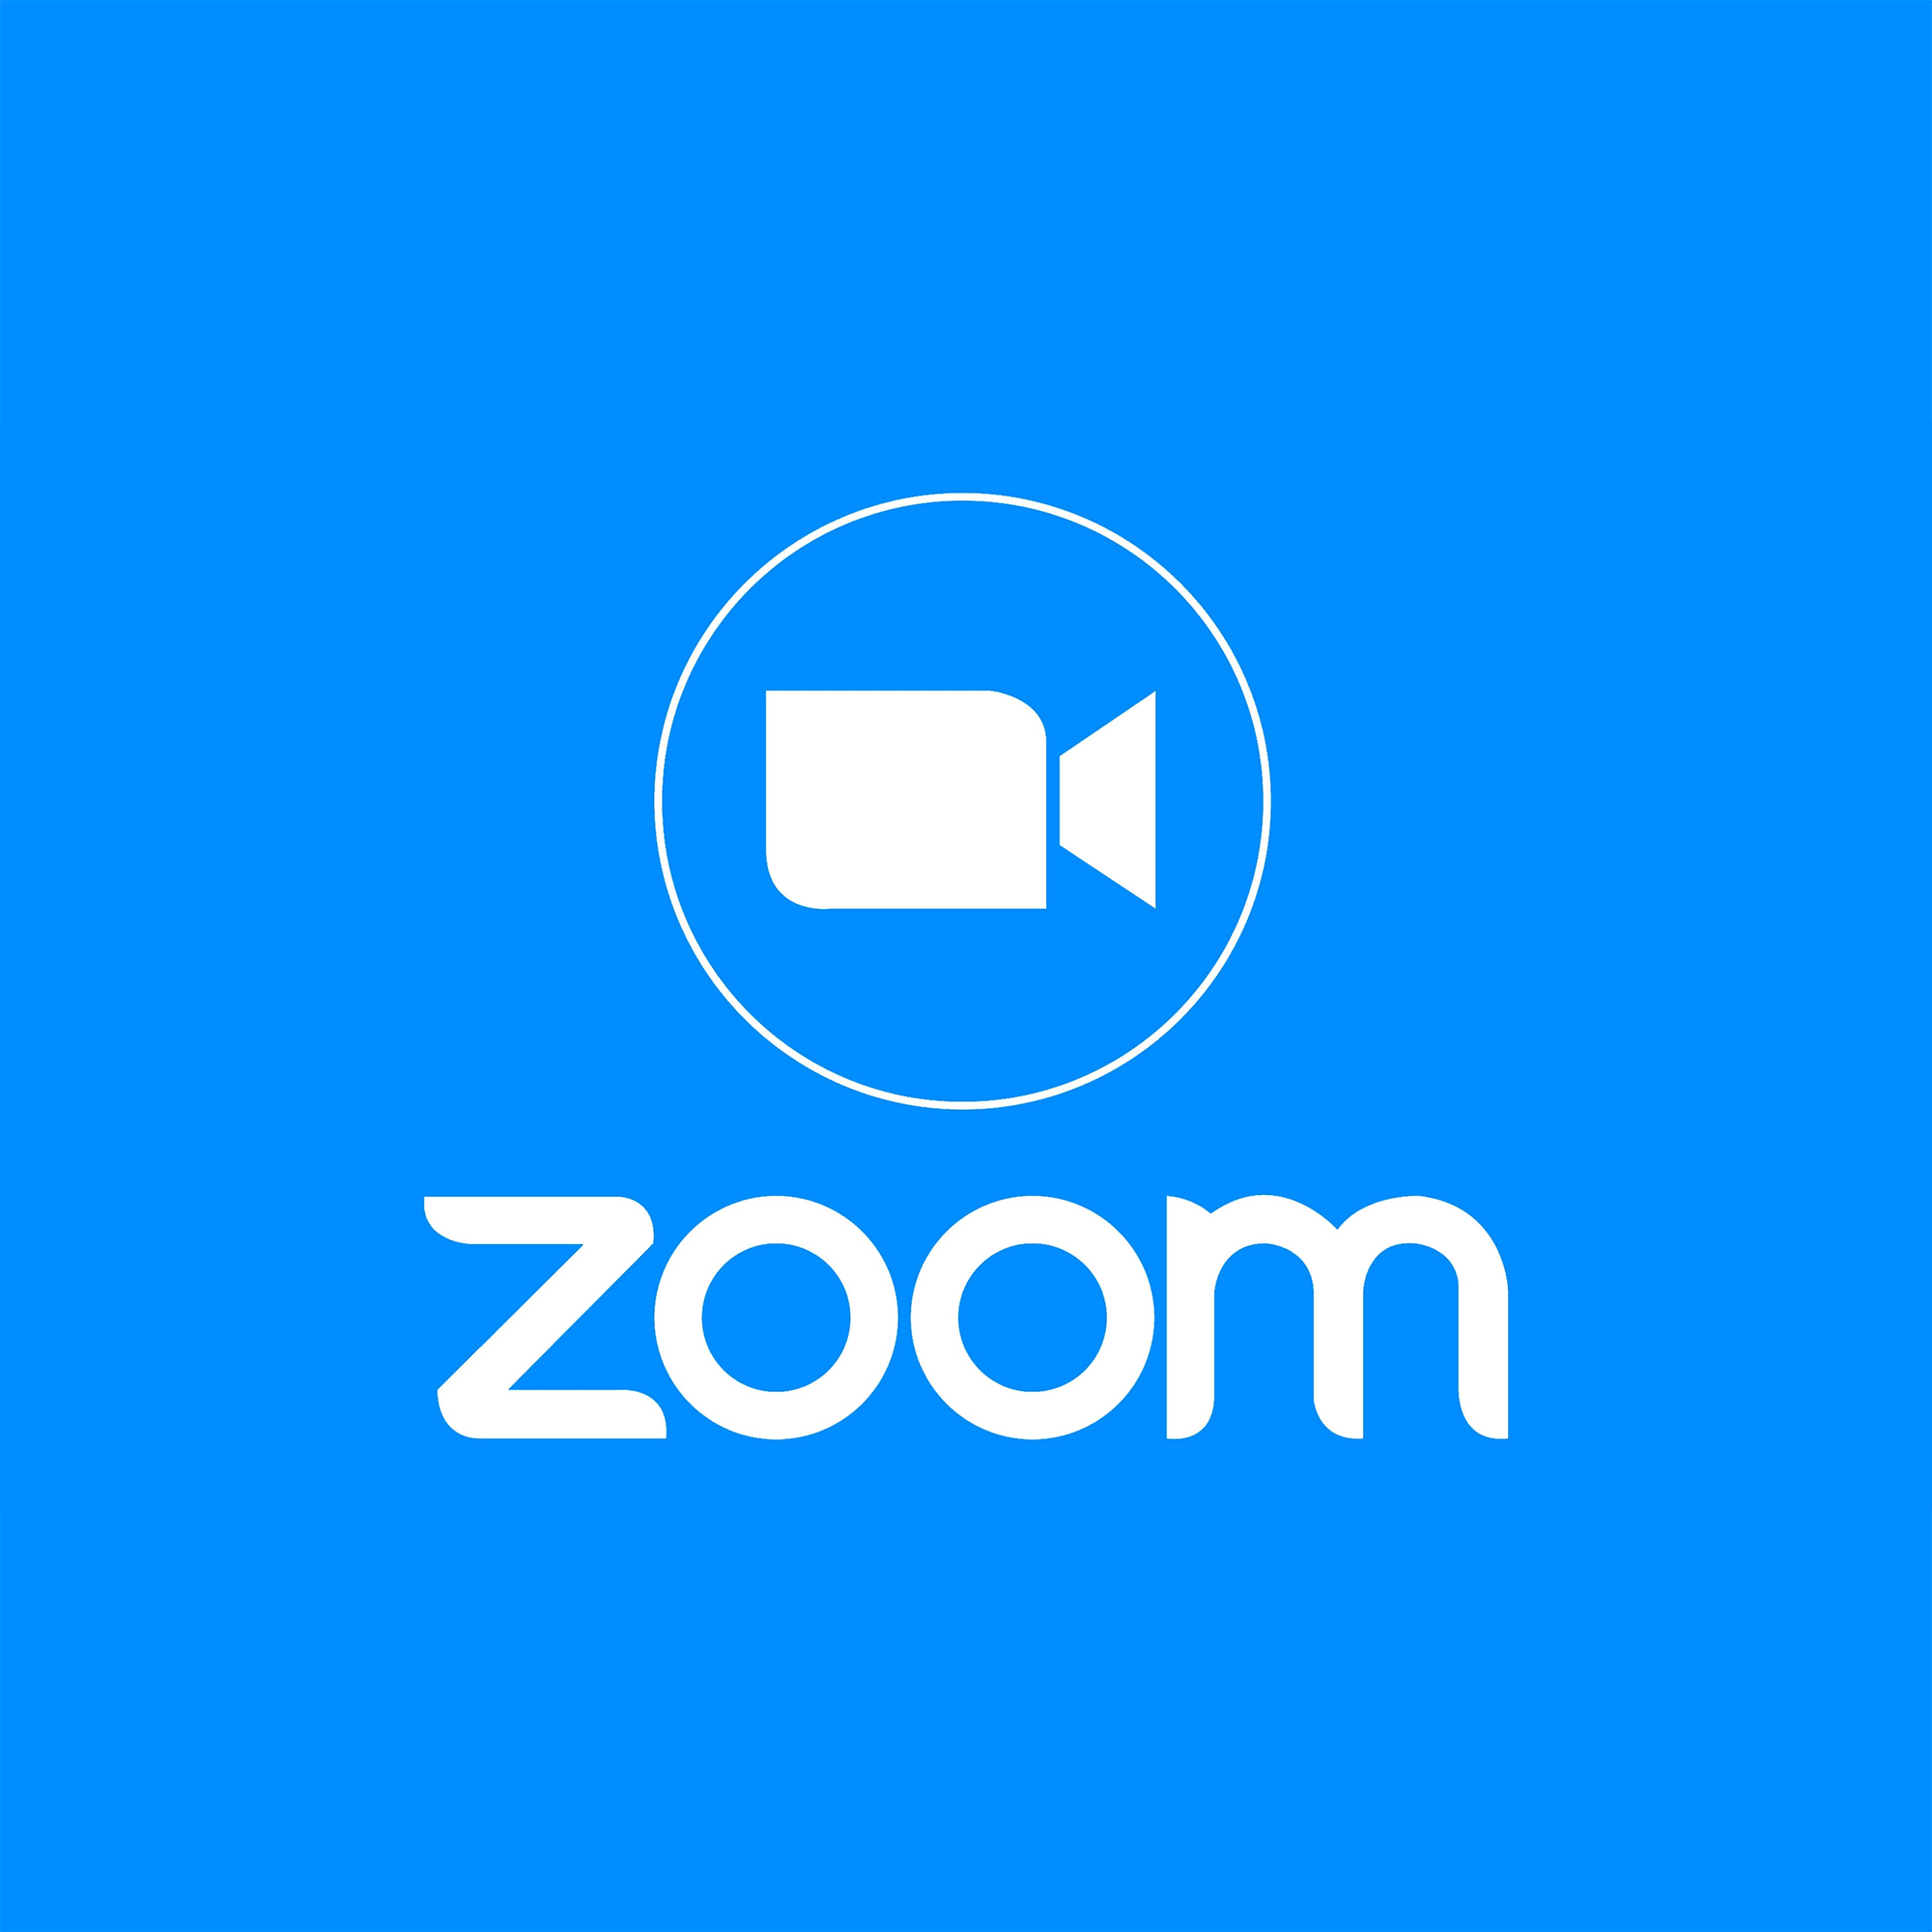 Zoom Logo PNG Transparent Images - PNG All